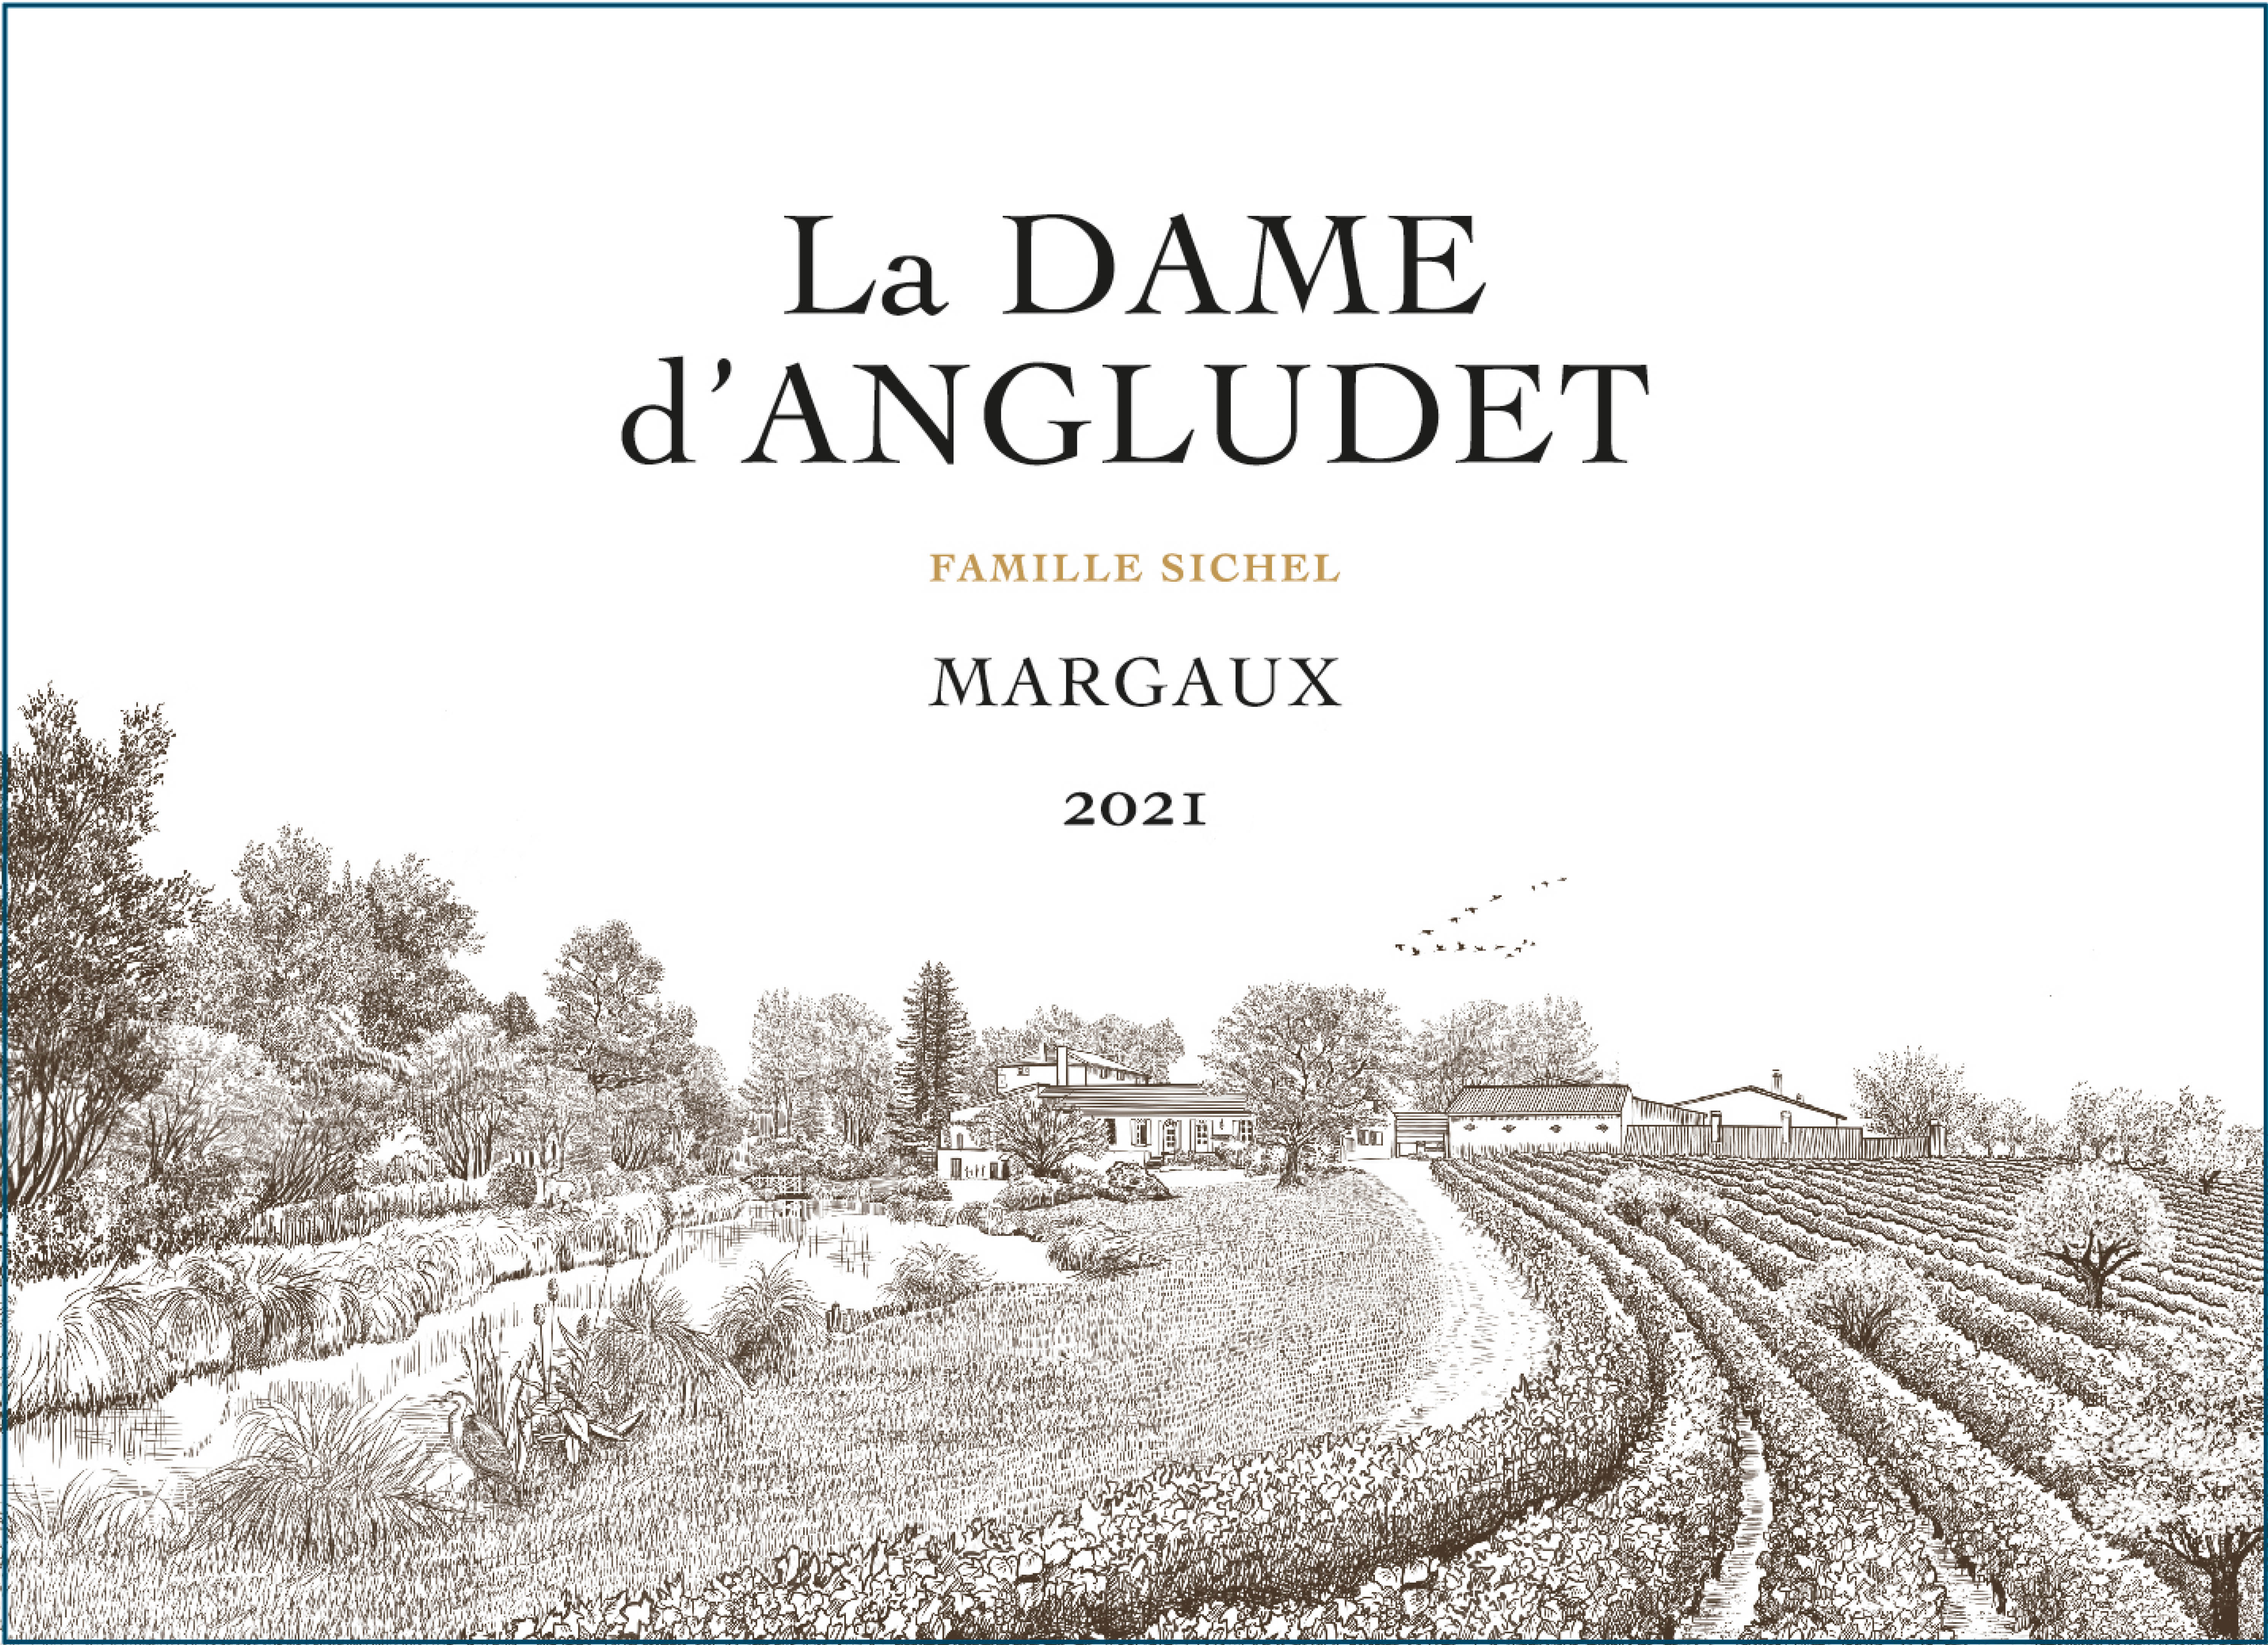 La Dame d'Angludet AOC Margaux Red 2021